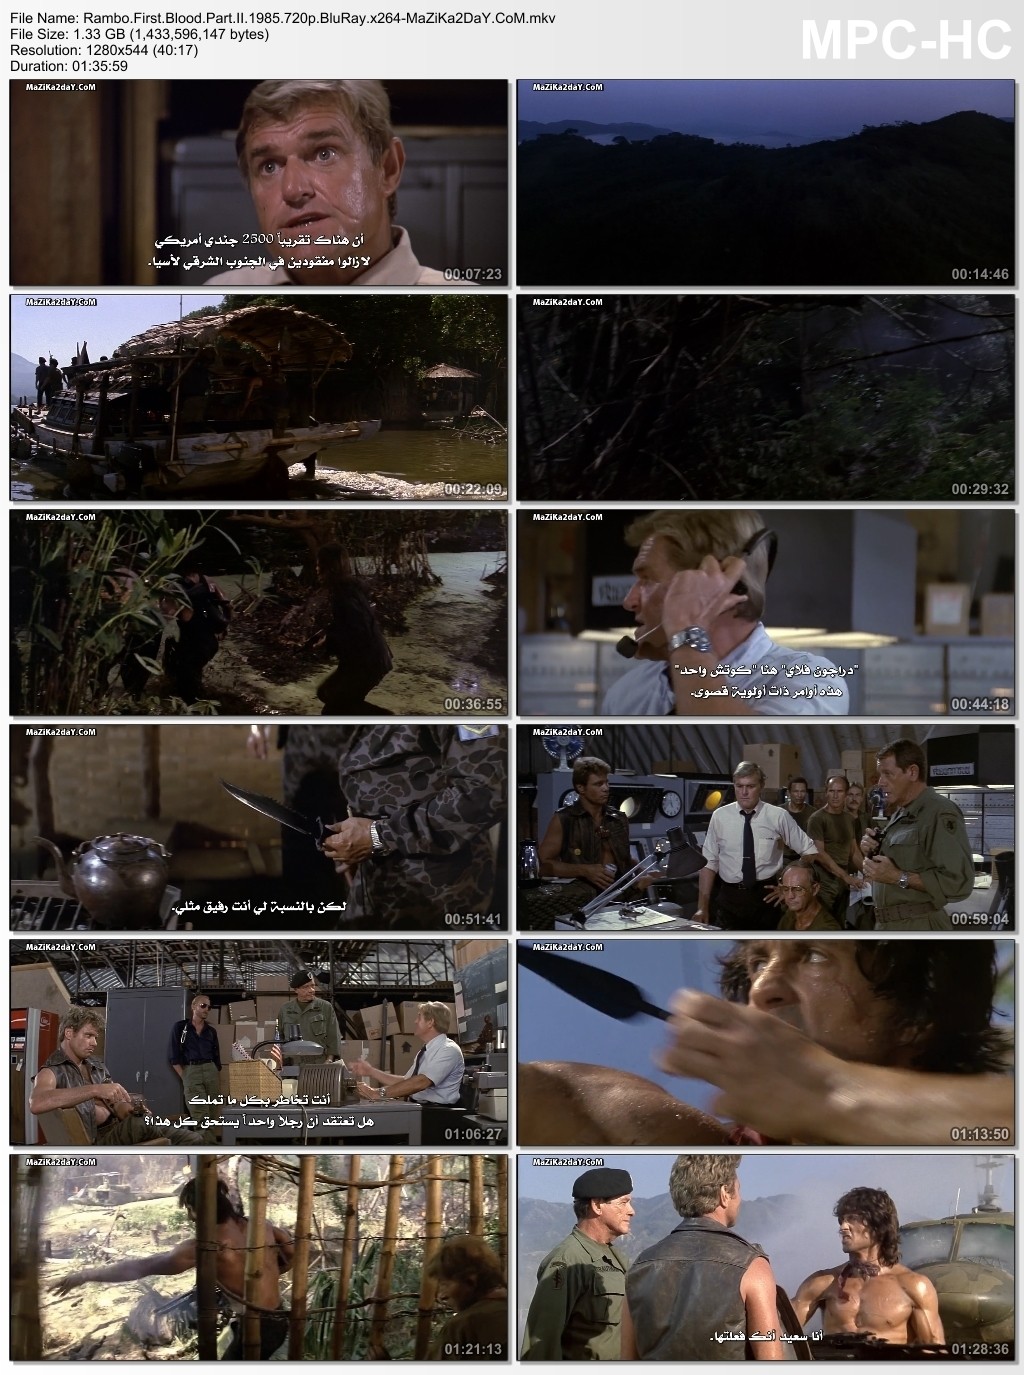 Rambo.First.Blood.Part.II.1985.720p.BluRay.x264-MaZiKa2DaY.CoM.mkv_thumbs